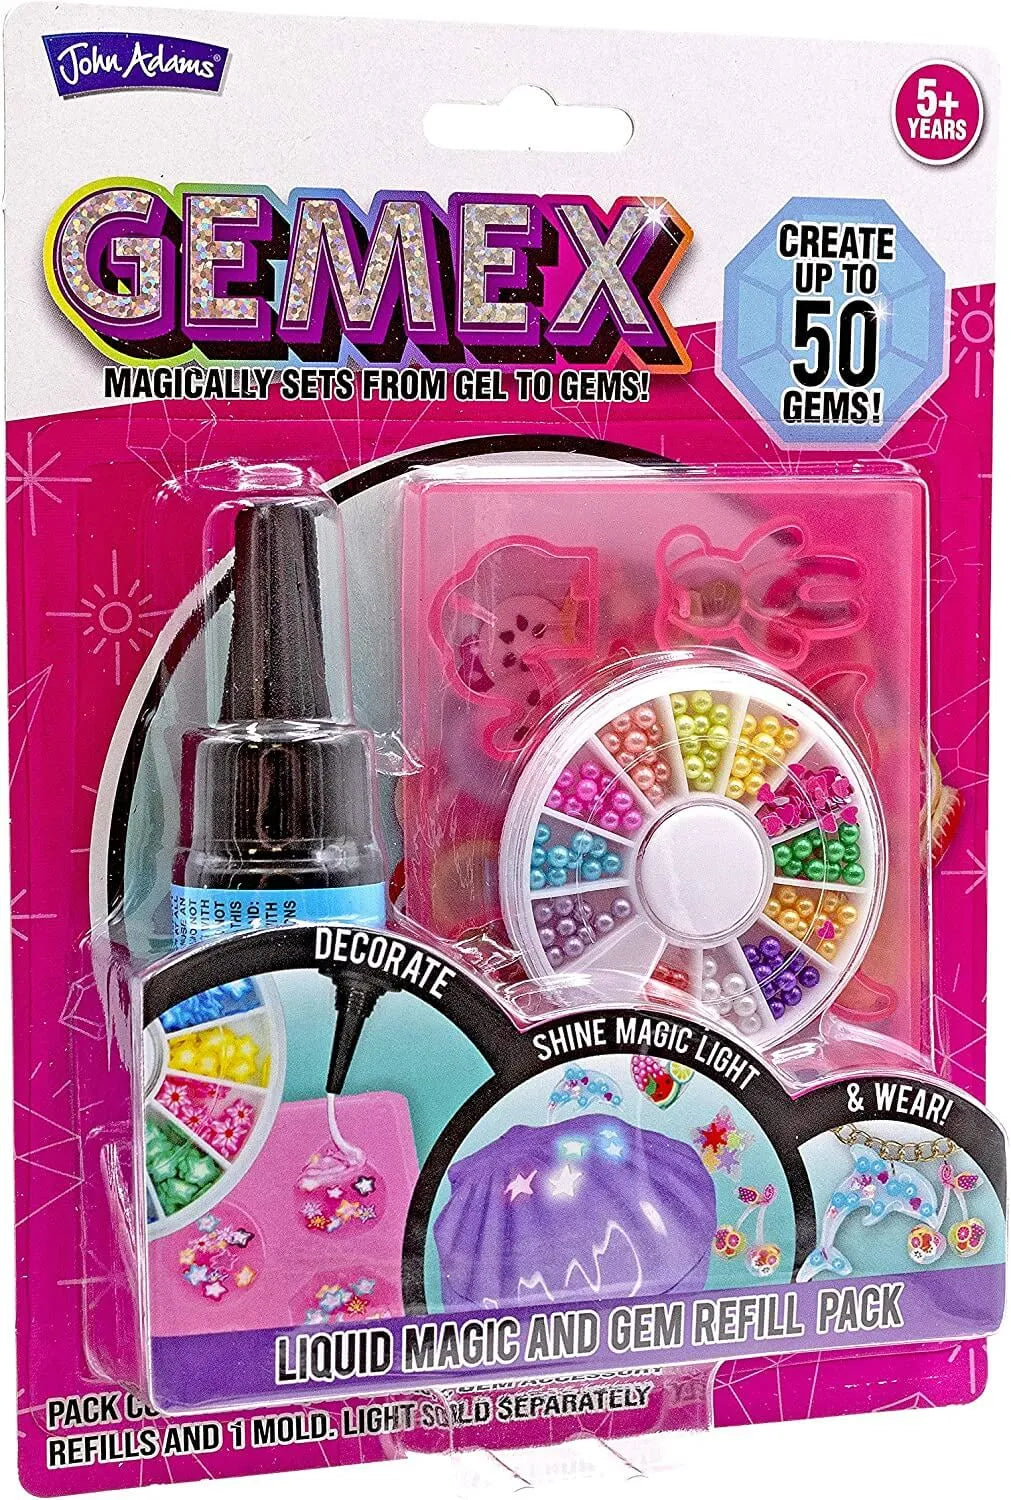 Gemex Refill Pack (Liquid and Gems) - John Adams - Creative activity kit for children